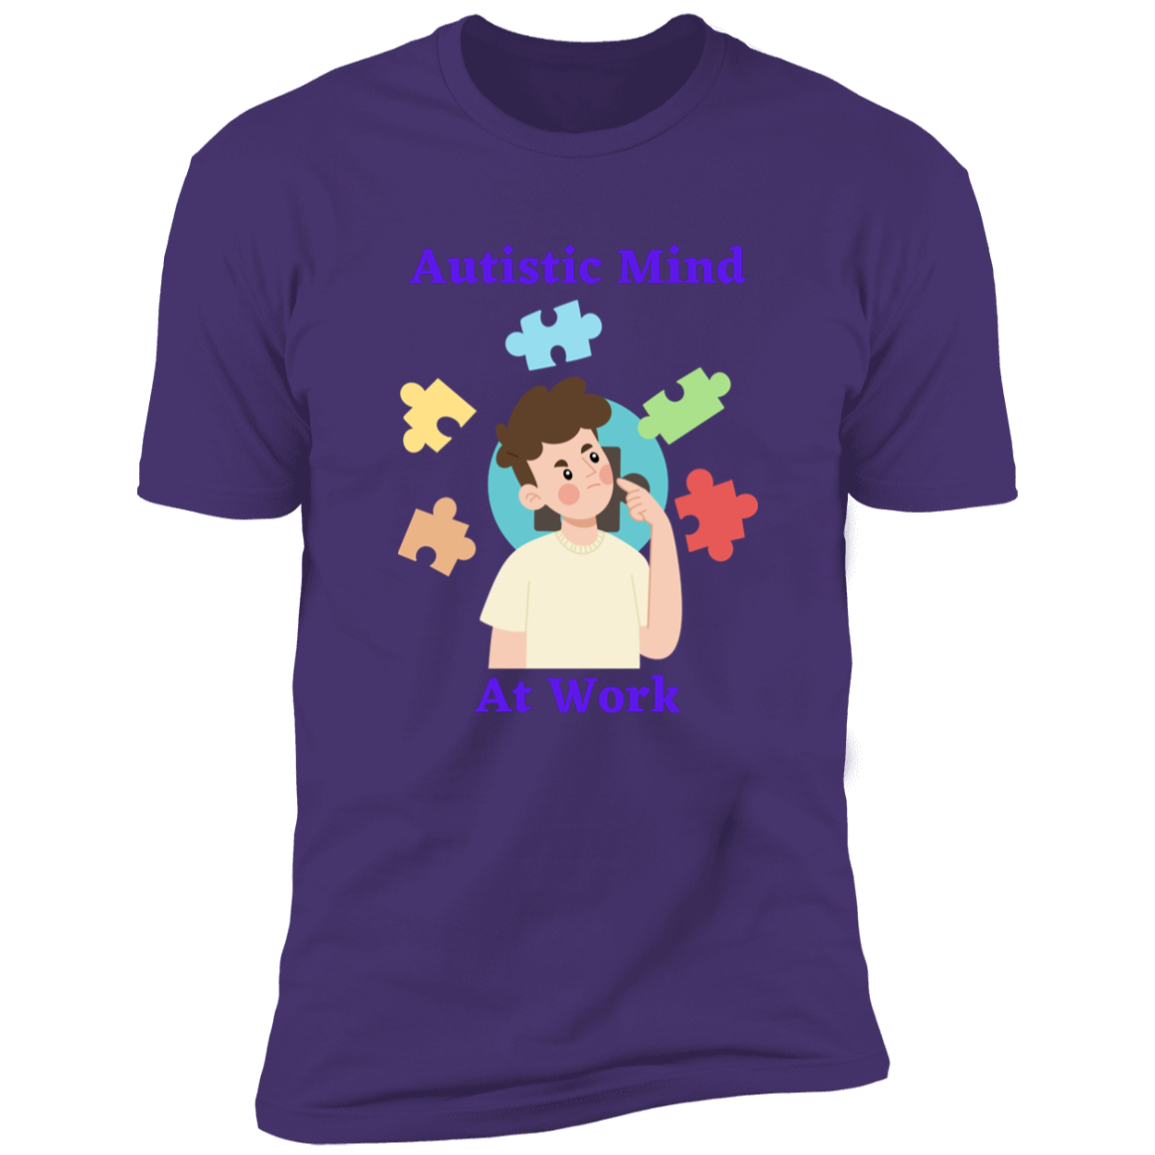 Autistic Mind Short Sleeve Shirt